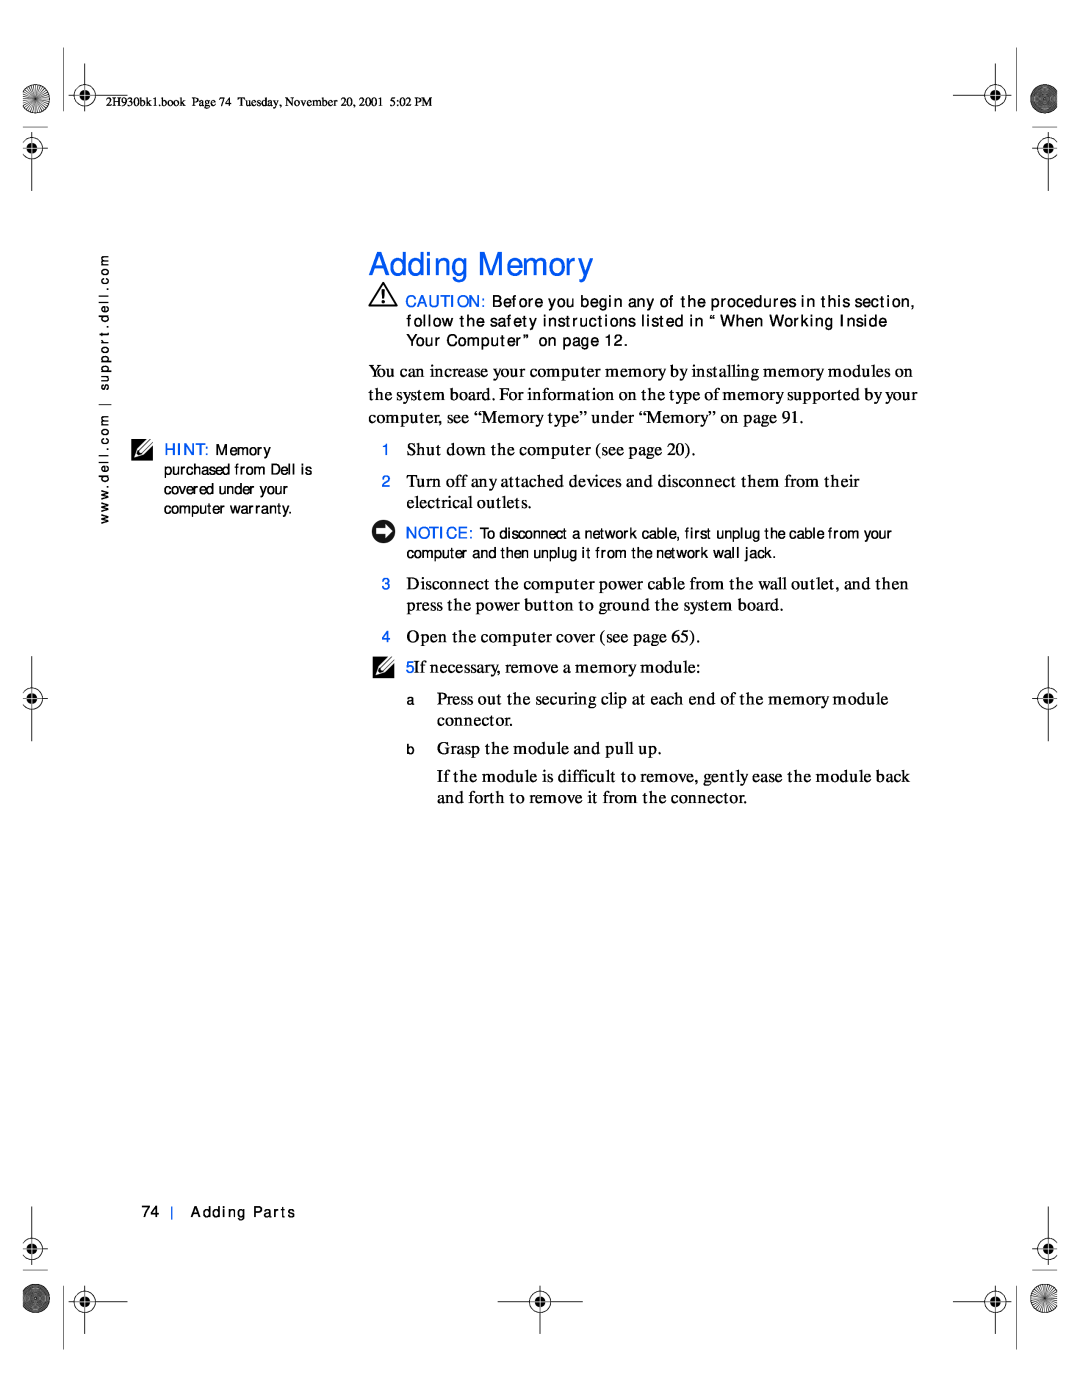 Dell 4300 manual Adding Memory, 2H930bk1.book Page 74 Tuesday, November 20, 2001 502 PM 